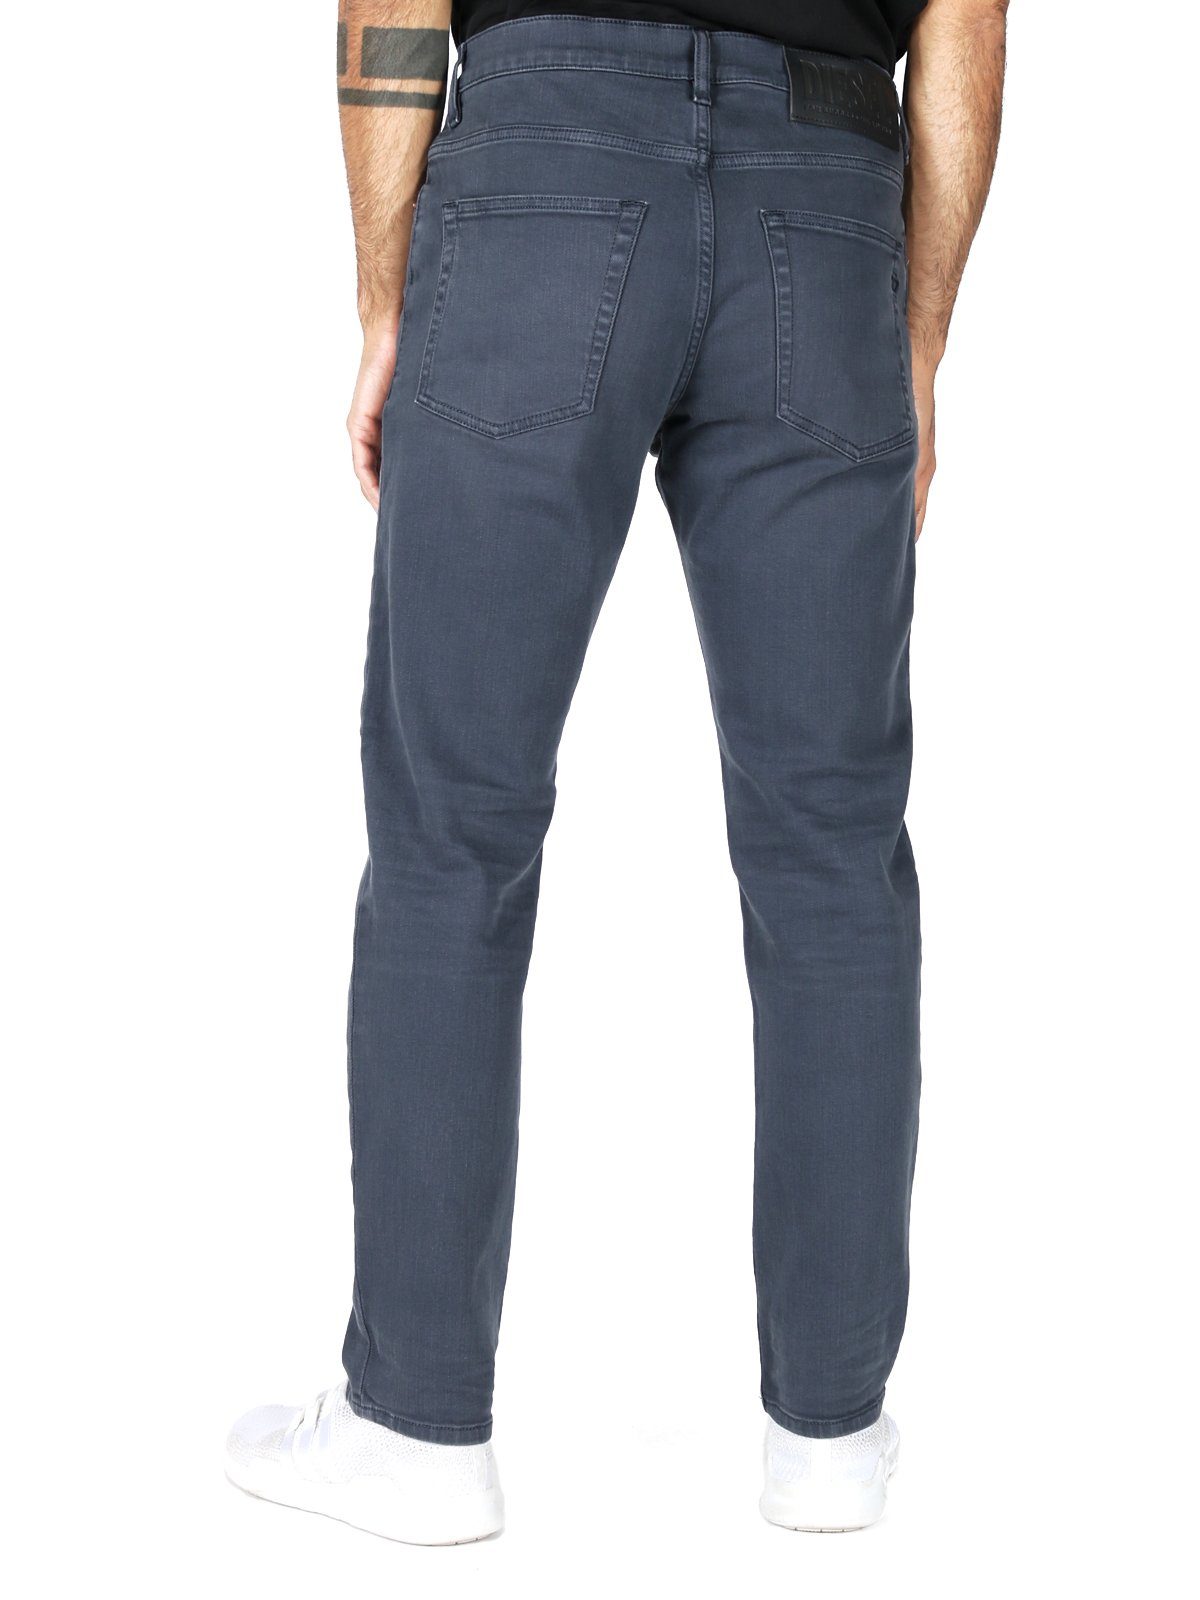 Dunkel 09A32 - Diesel Blau Stretch Tapered-fit-Jeans D-Fining - Knöchellange Hose